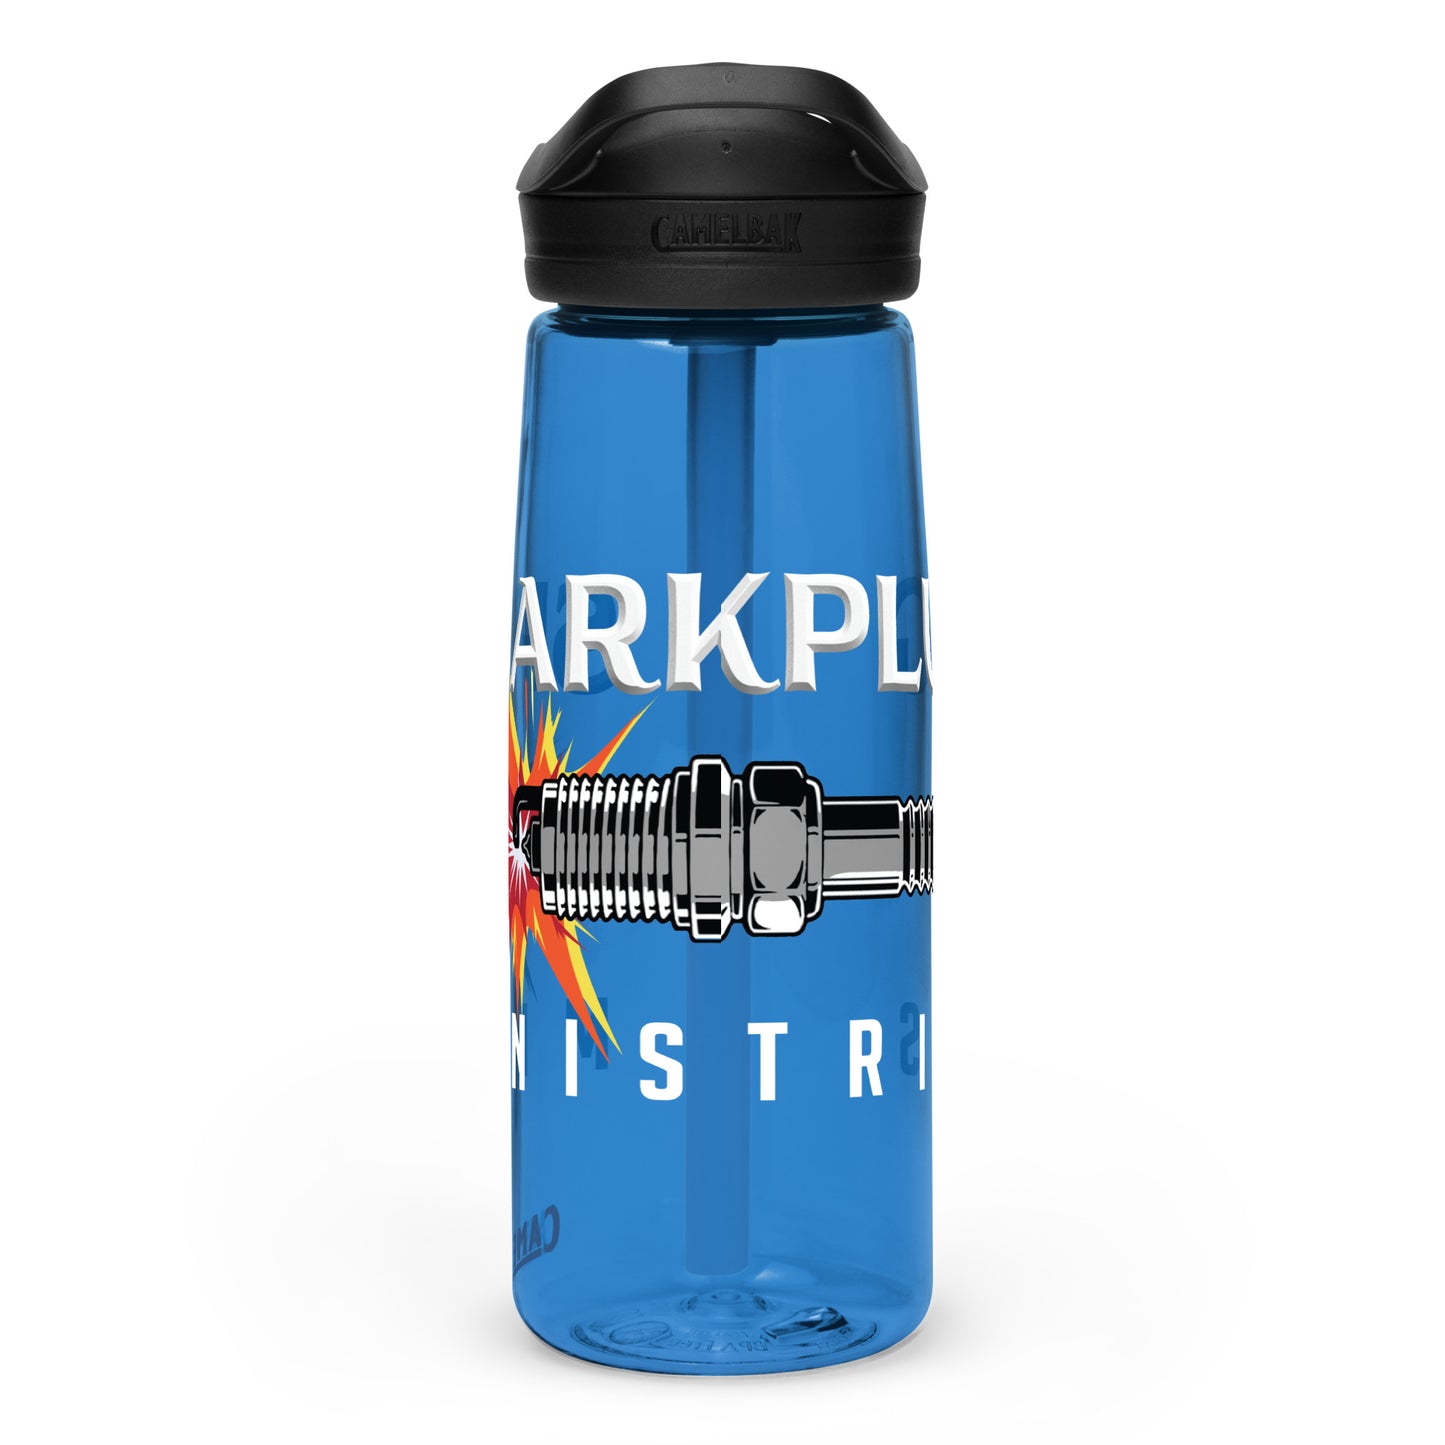 Sparkplug Sports water bottle